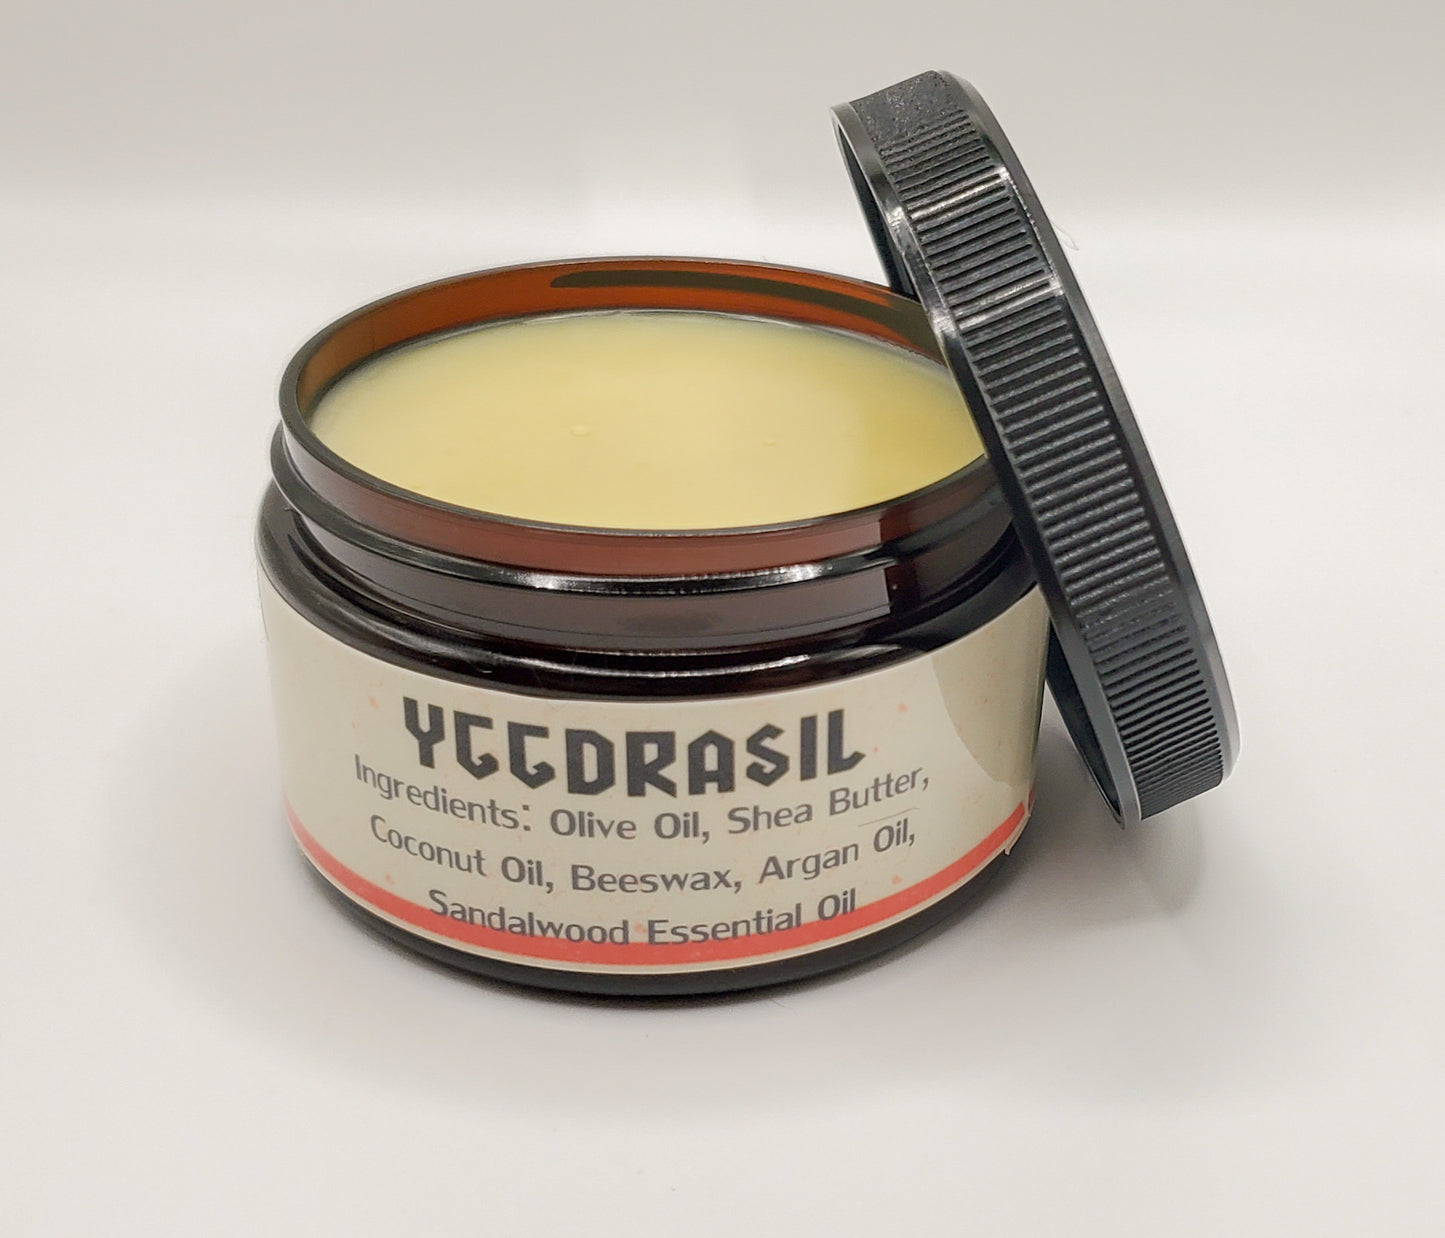 Yggdrasil Beard Care Kit // Sandalwood Beard Grooming Set